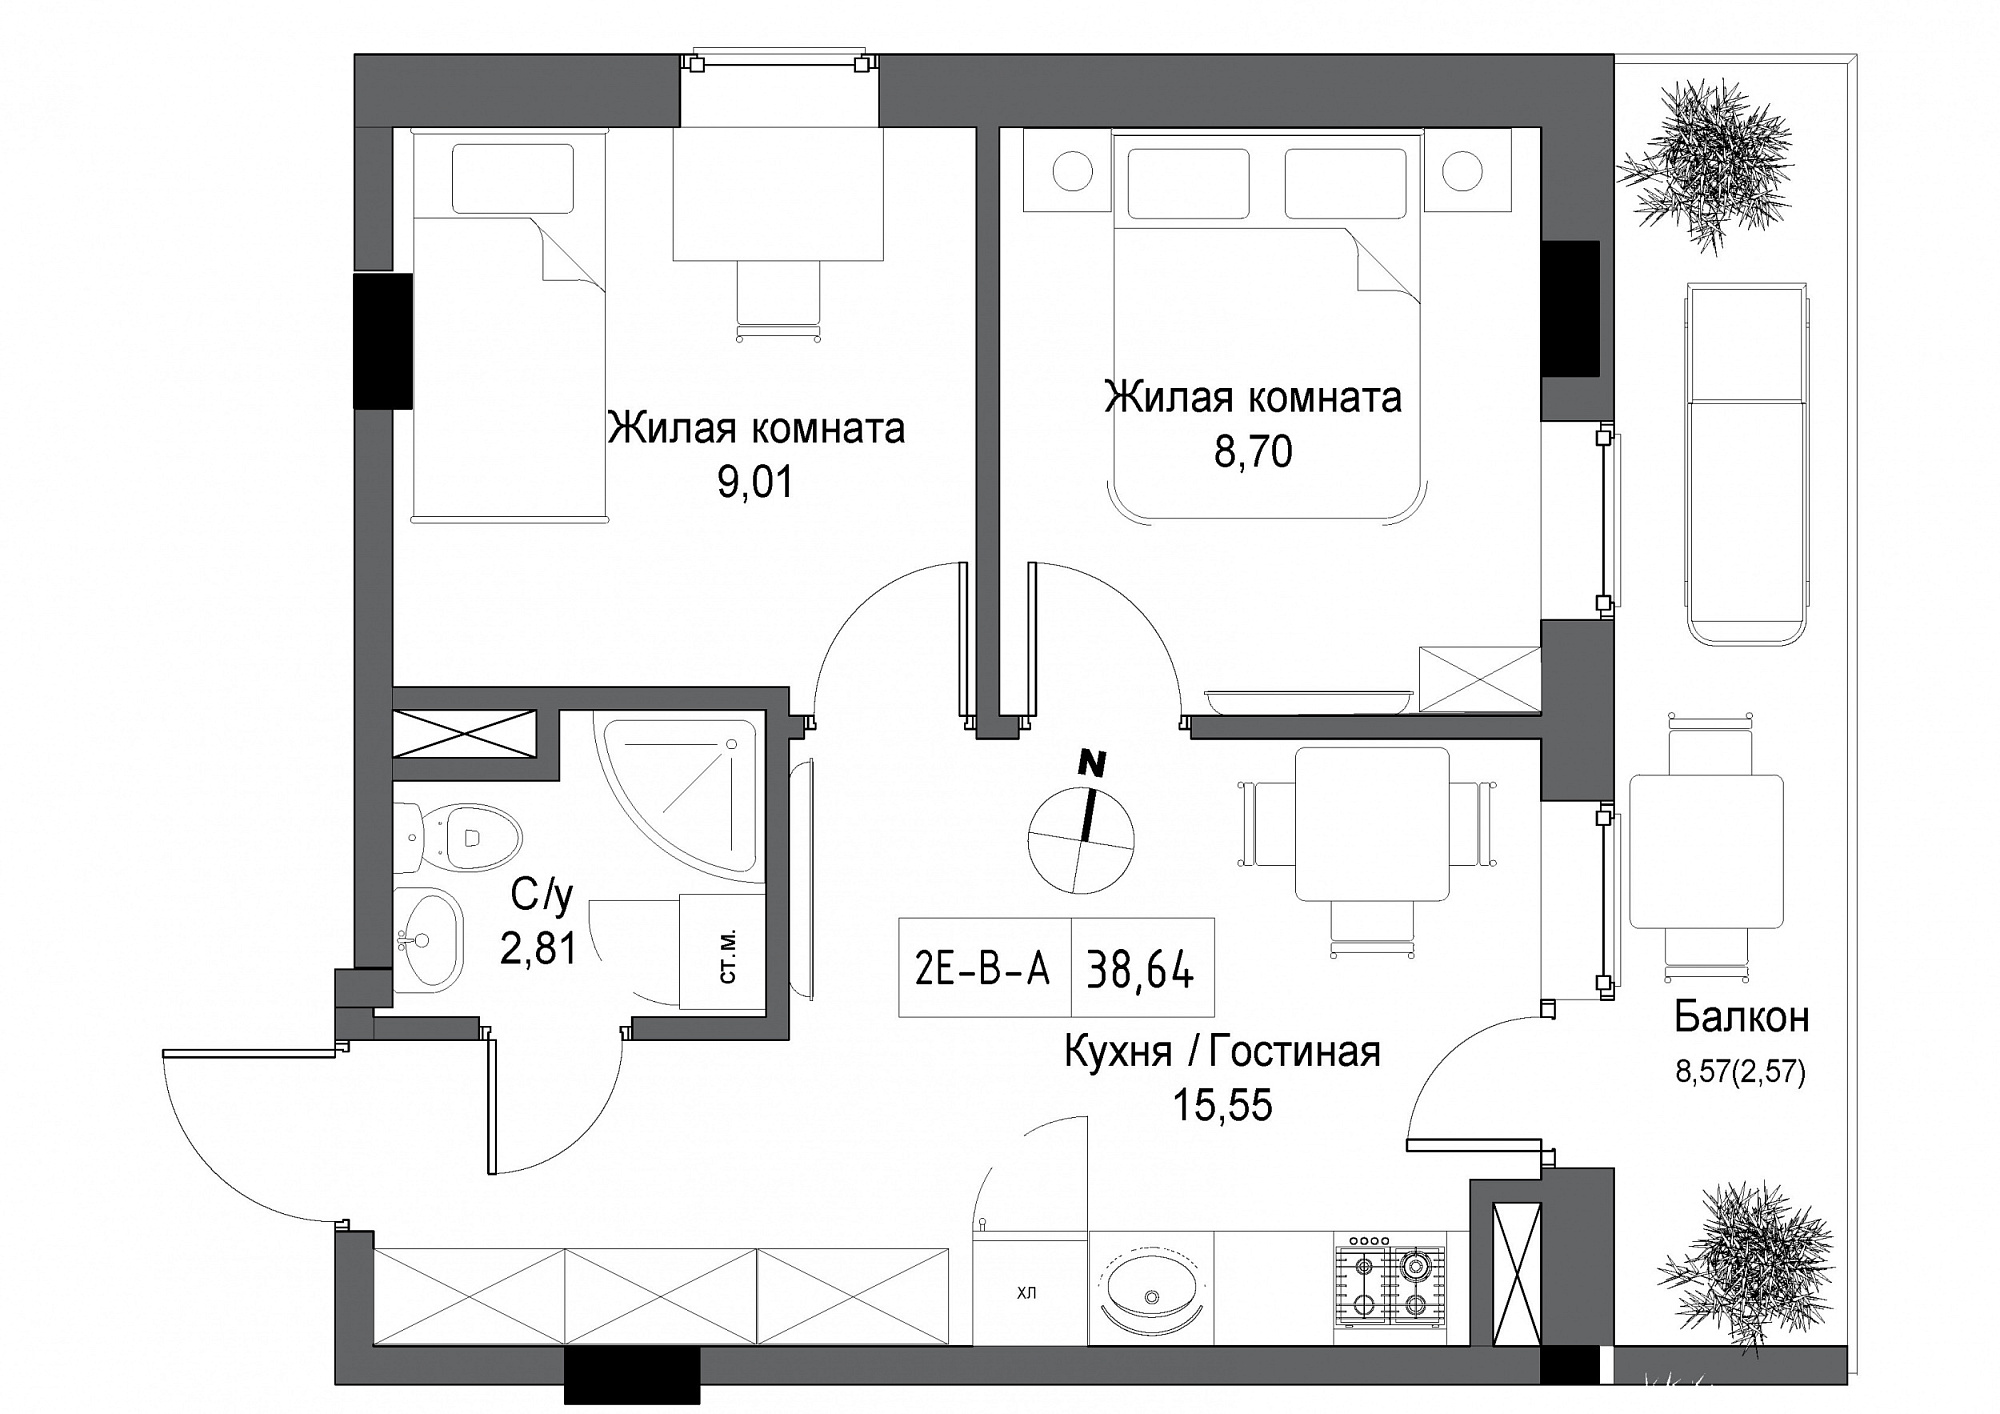 Планування 2-к квартира площею 38.64м2, UM-004-07/0005.